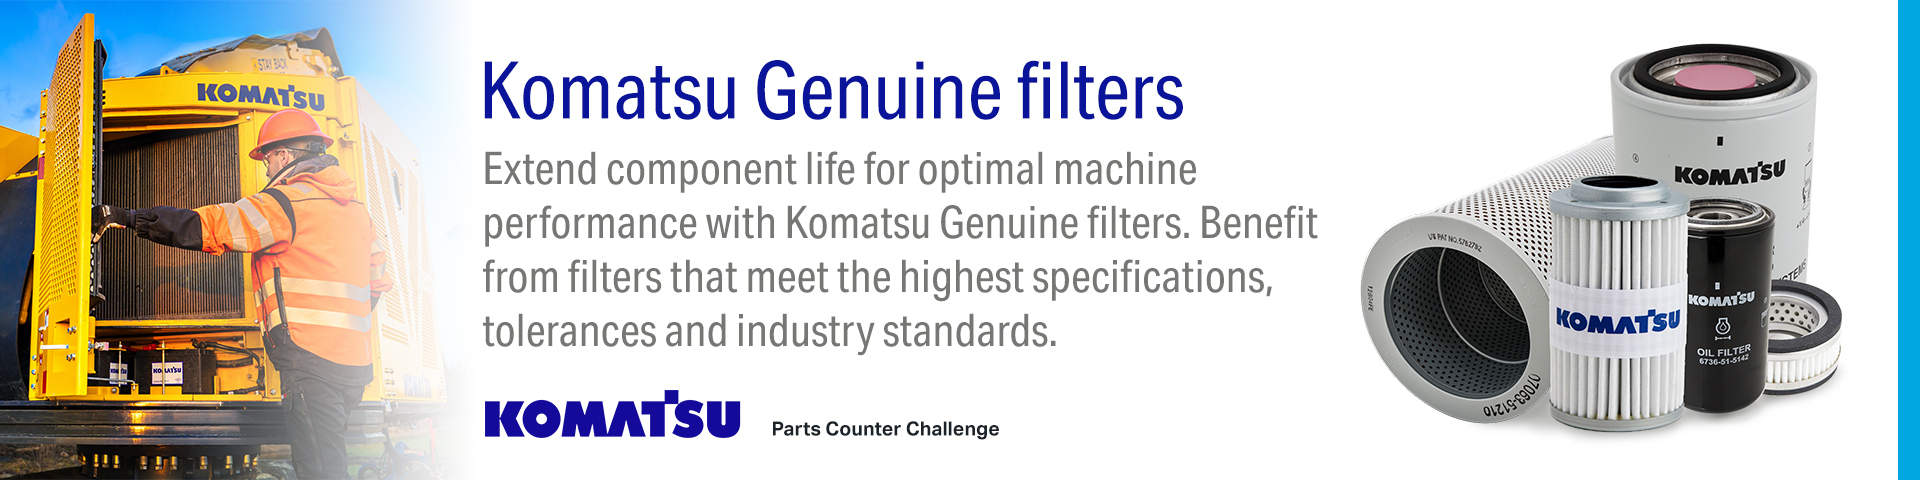 Komatsu-genuine-filters